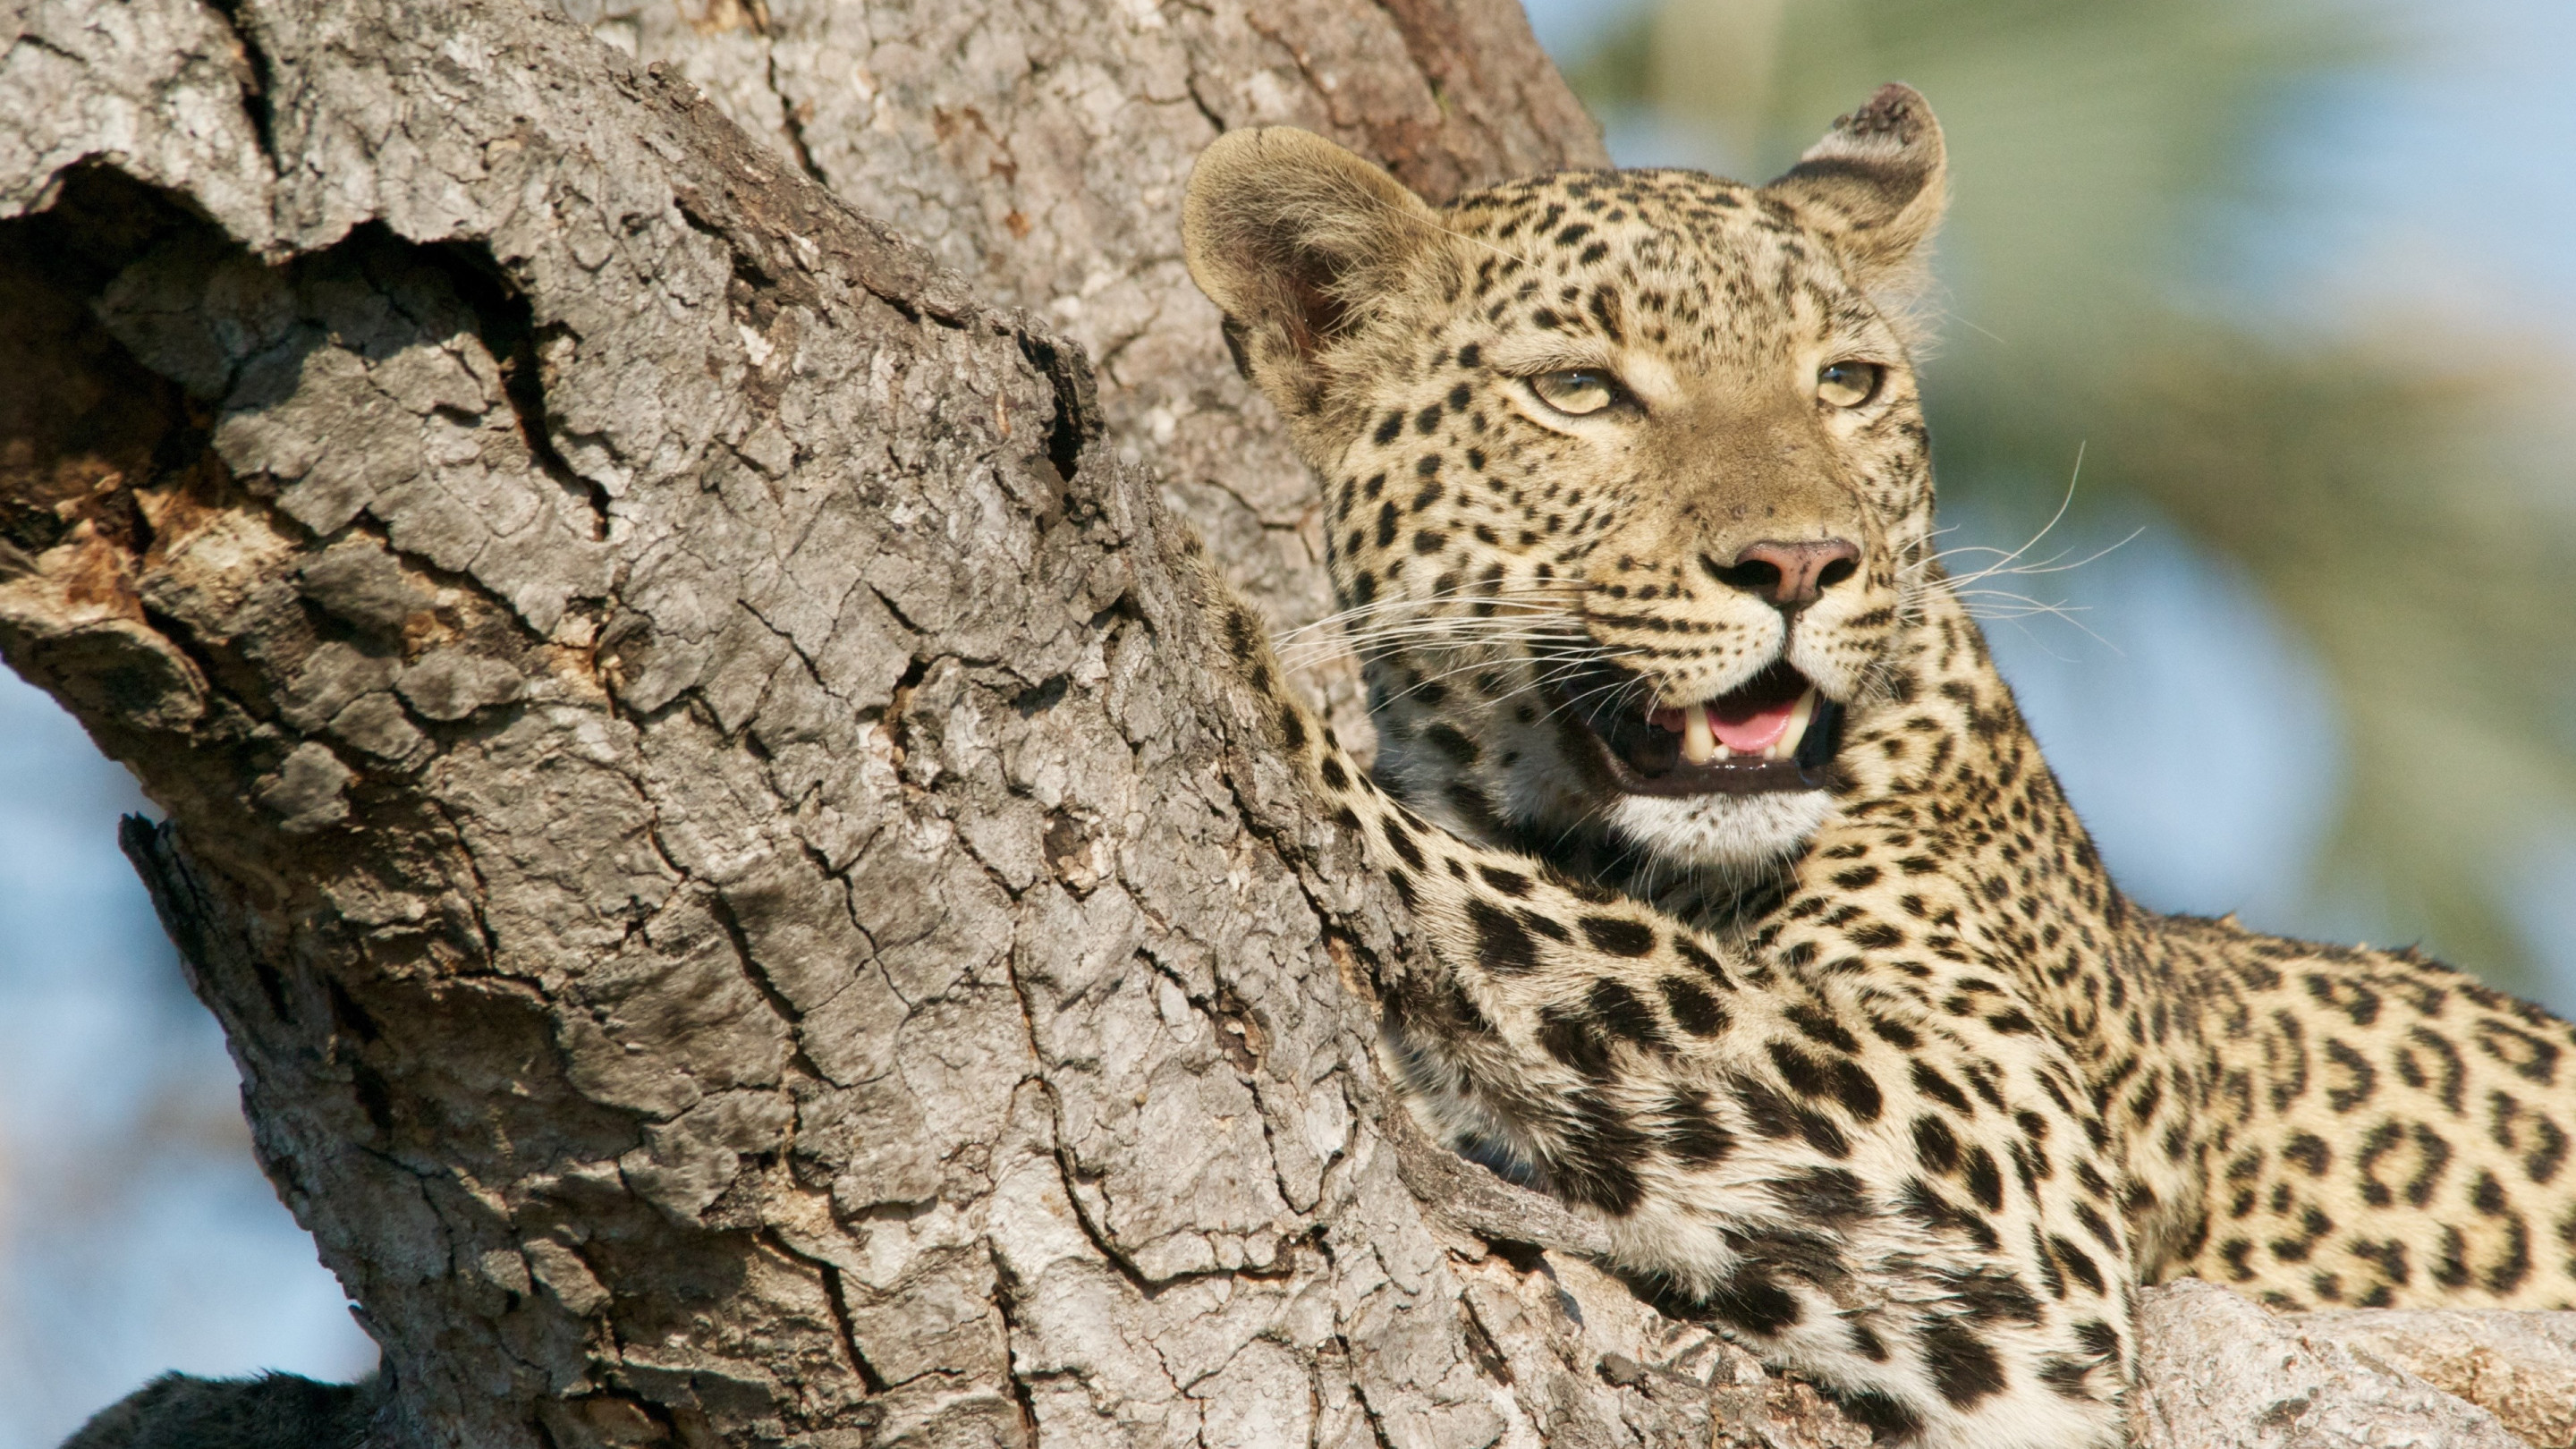 Wild leopard from tree wallpaper 2880x1620